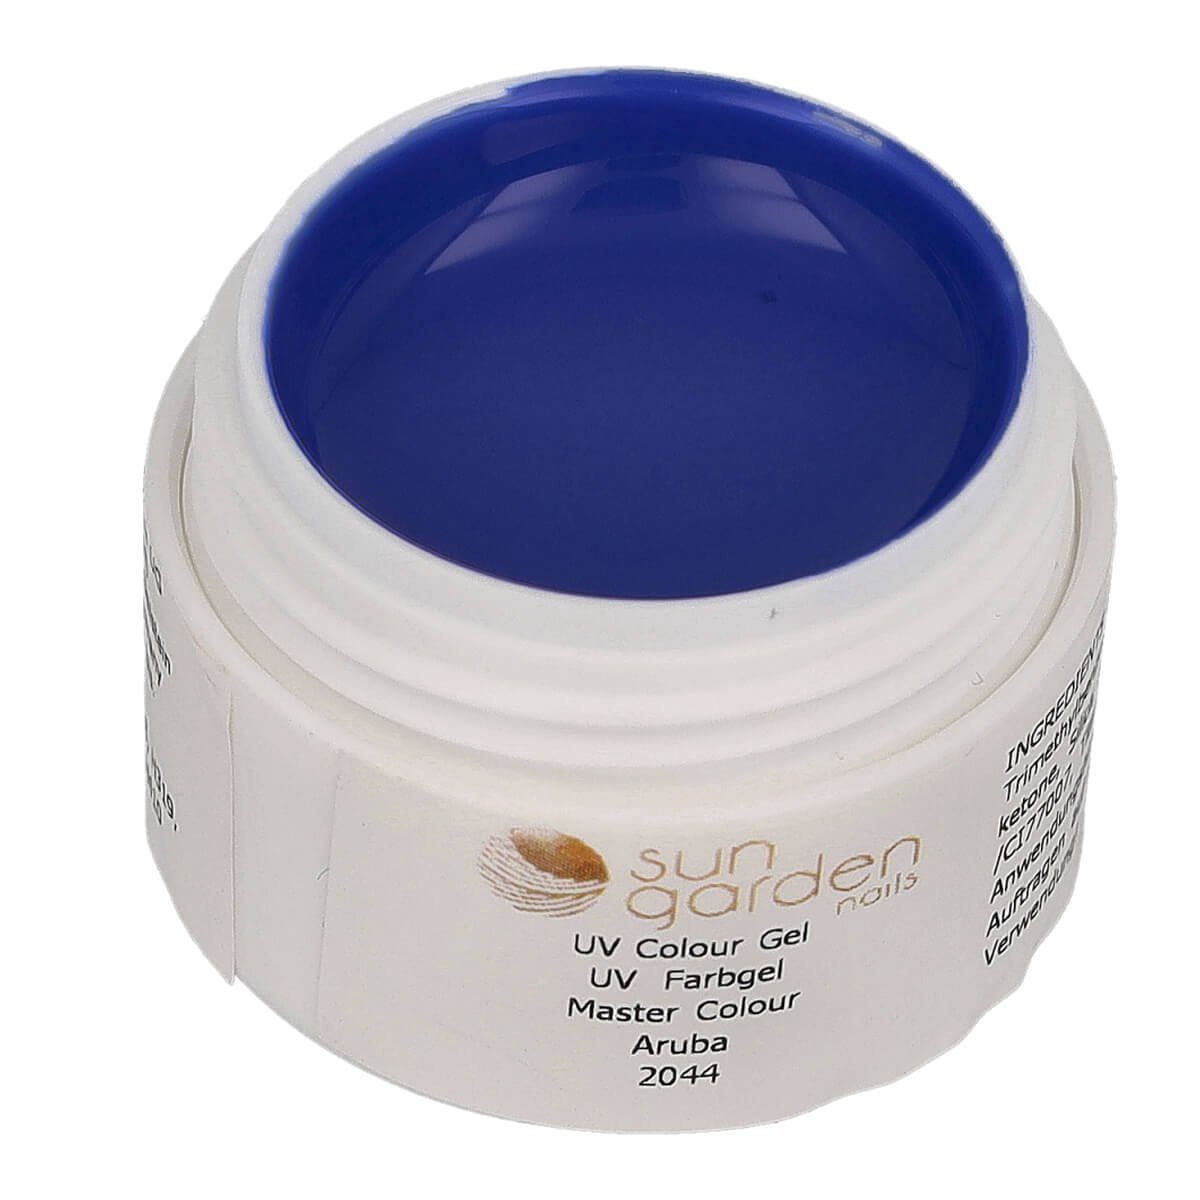 Sun Garden Nails UV-Gel N°2044 Gel Master ml Supreme - - 5 Line Aruba Color UV Color